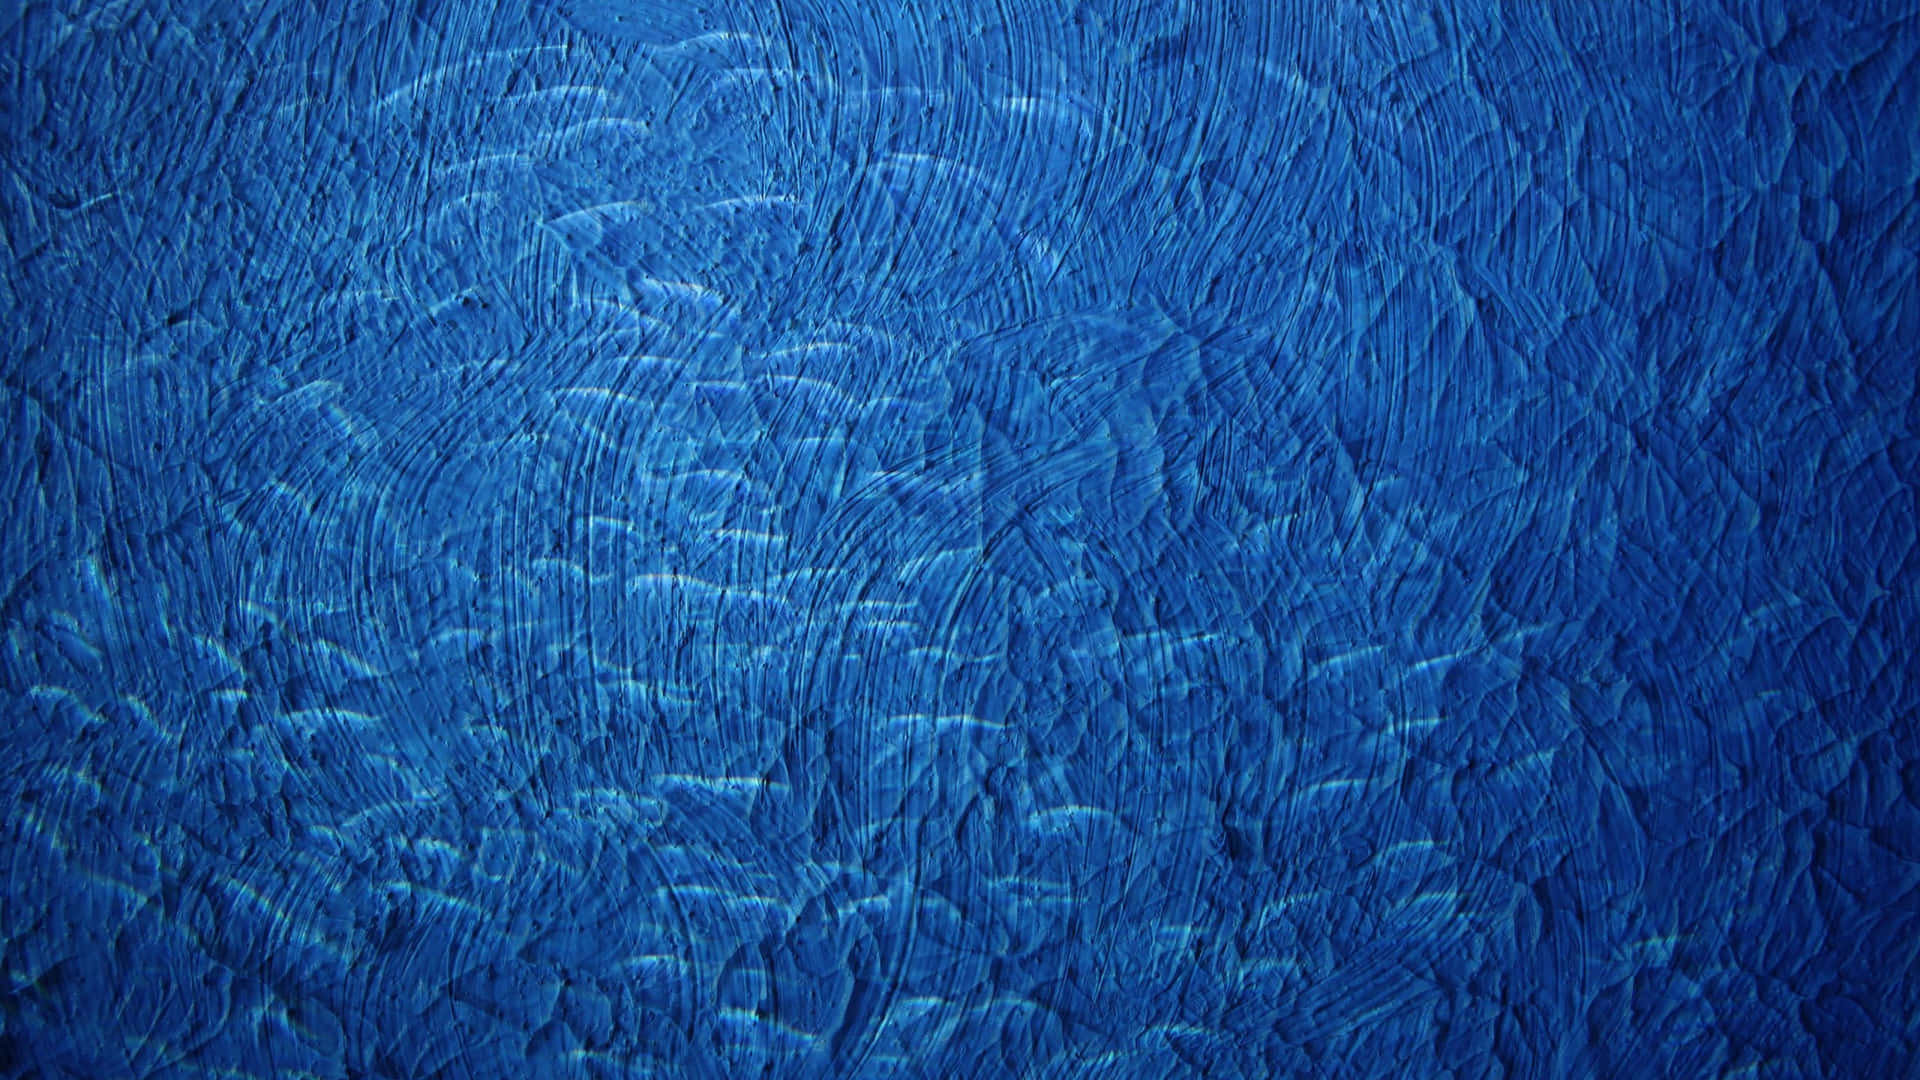 Imagensde Textura De Tinta Azul Para Papel De Parede De Computador Ou Celular.